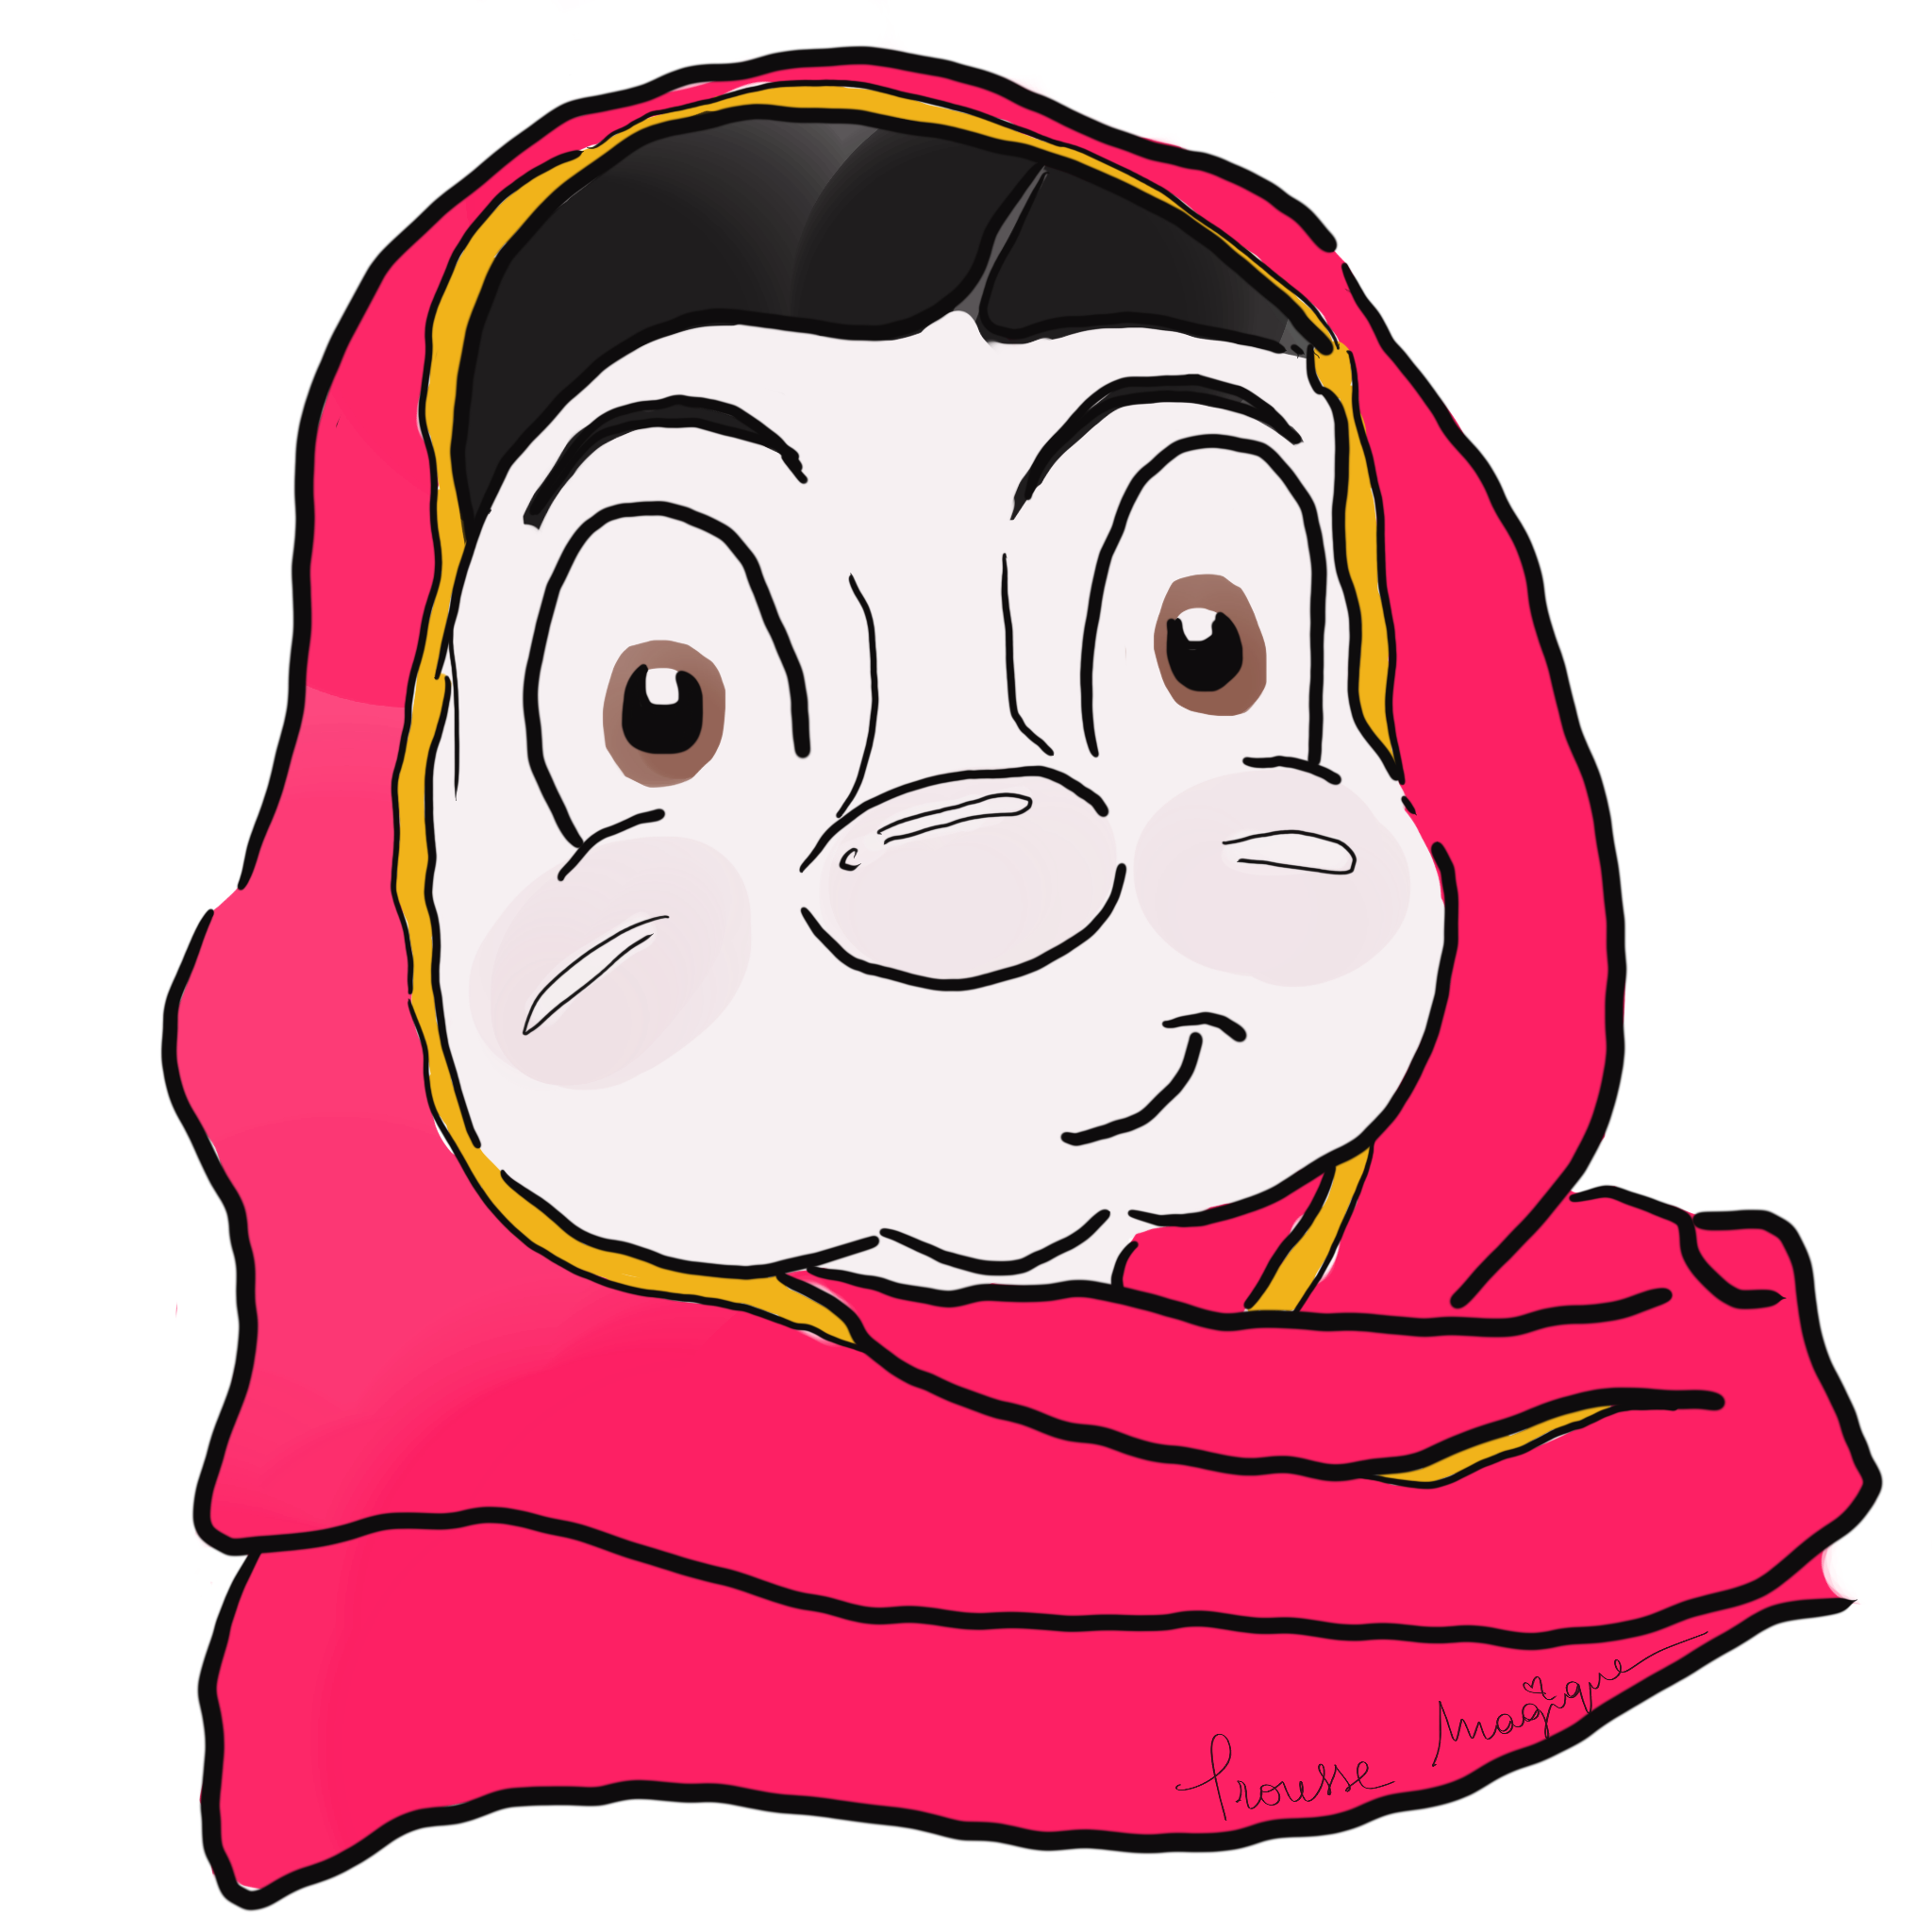 Malala Pakistan